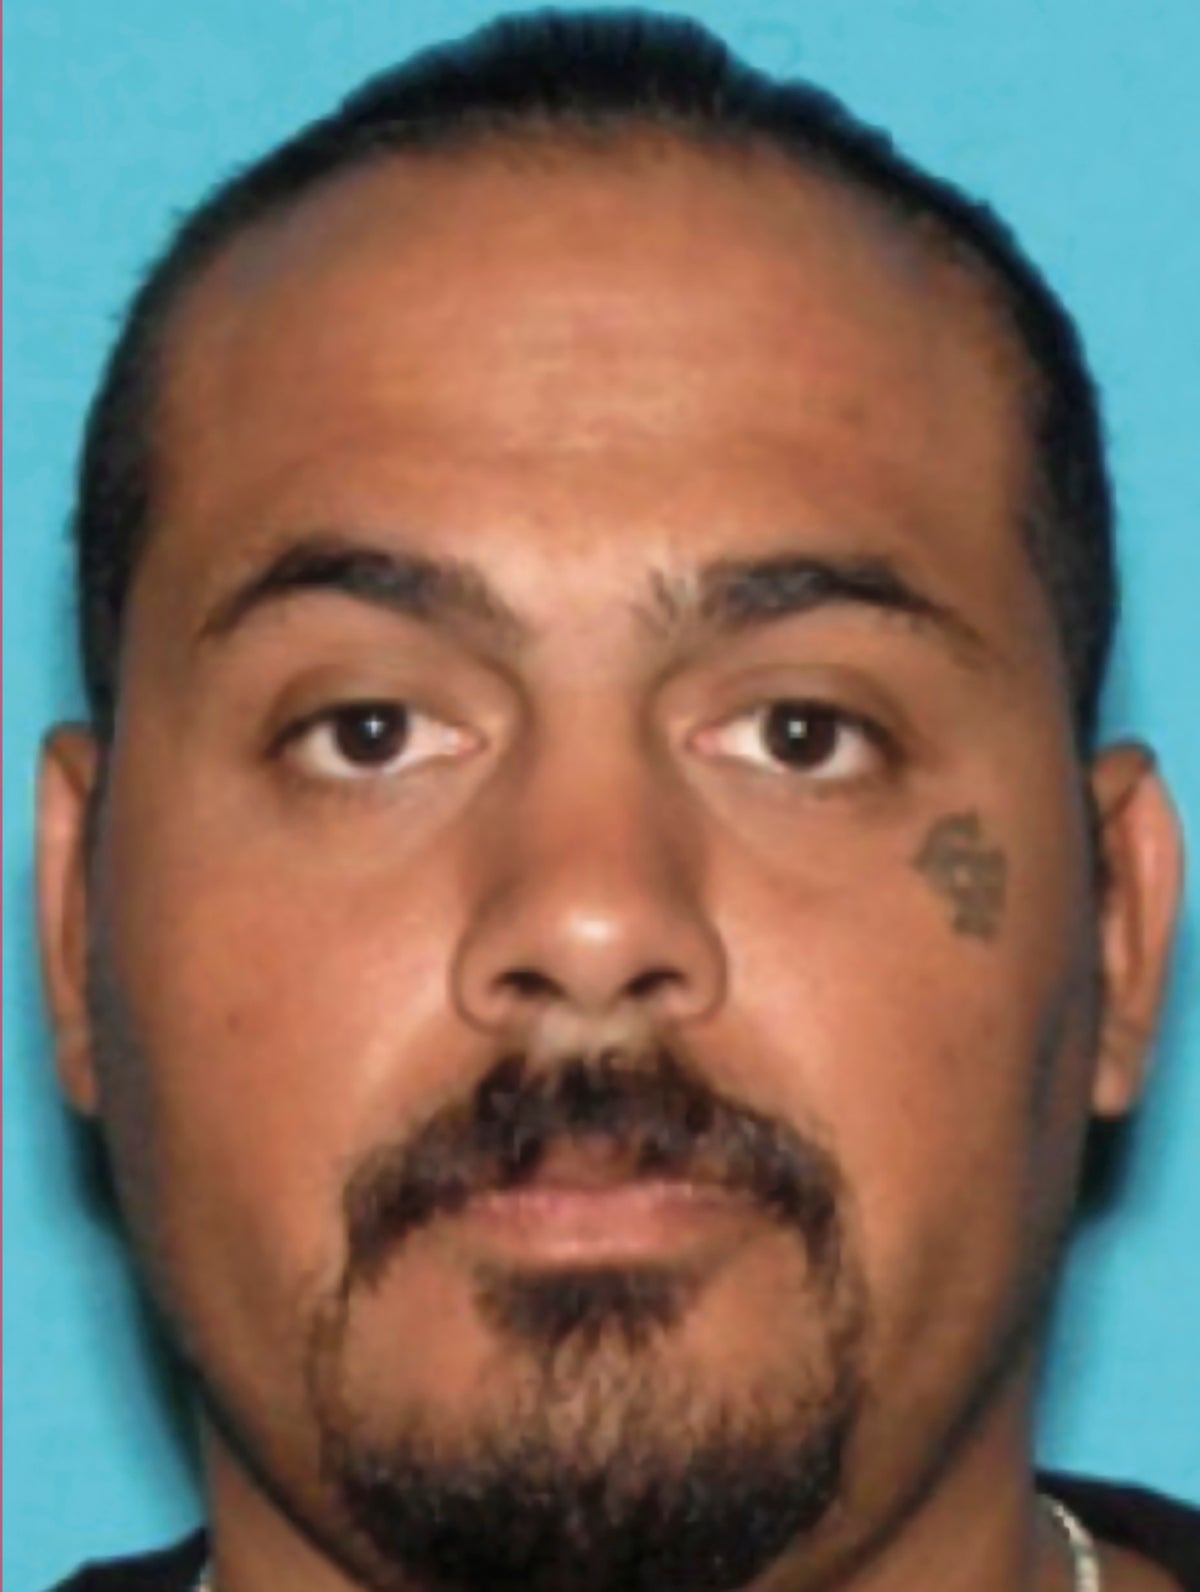 Alleged gang member pleads not guilty in California killings